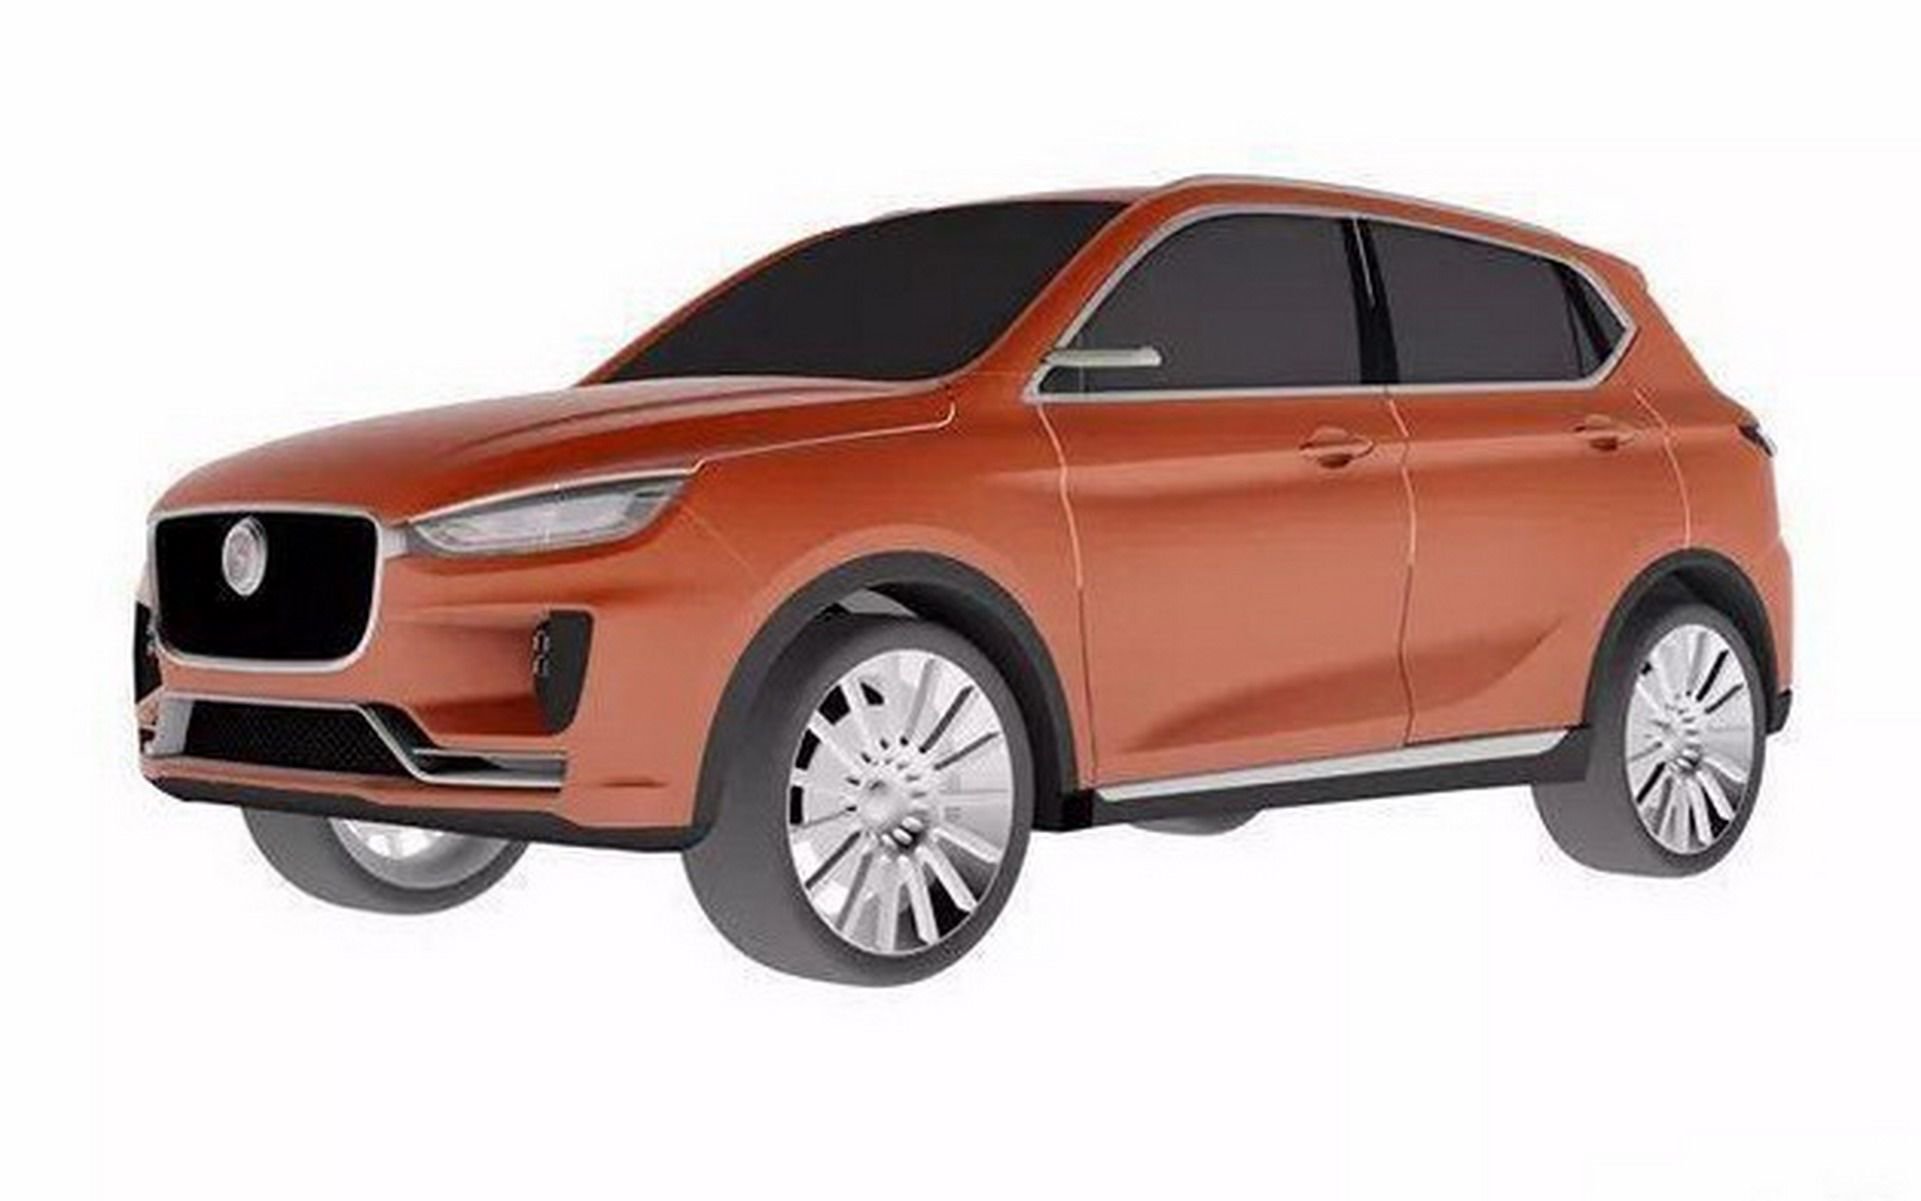 Berita, Hanteng SUV depan: Hanteng SUV : Jaguar F-PACE Versi KW China